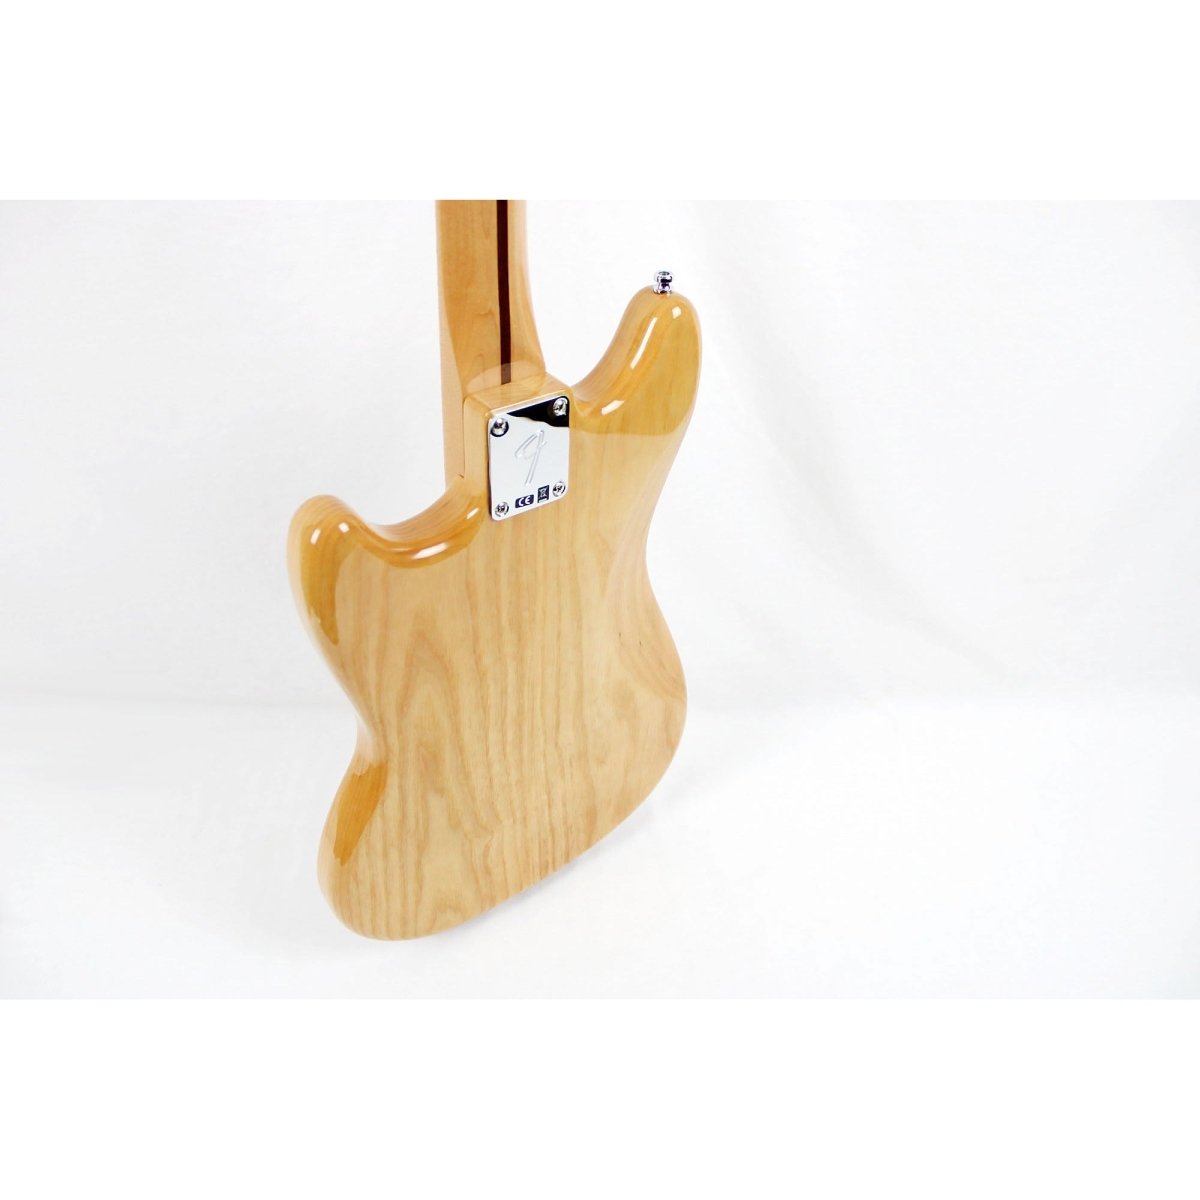 Fender Ben Gibbard Mustang - Natural **MINT - USED** - Leitz Music-885978484058-0141332321